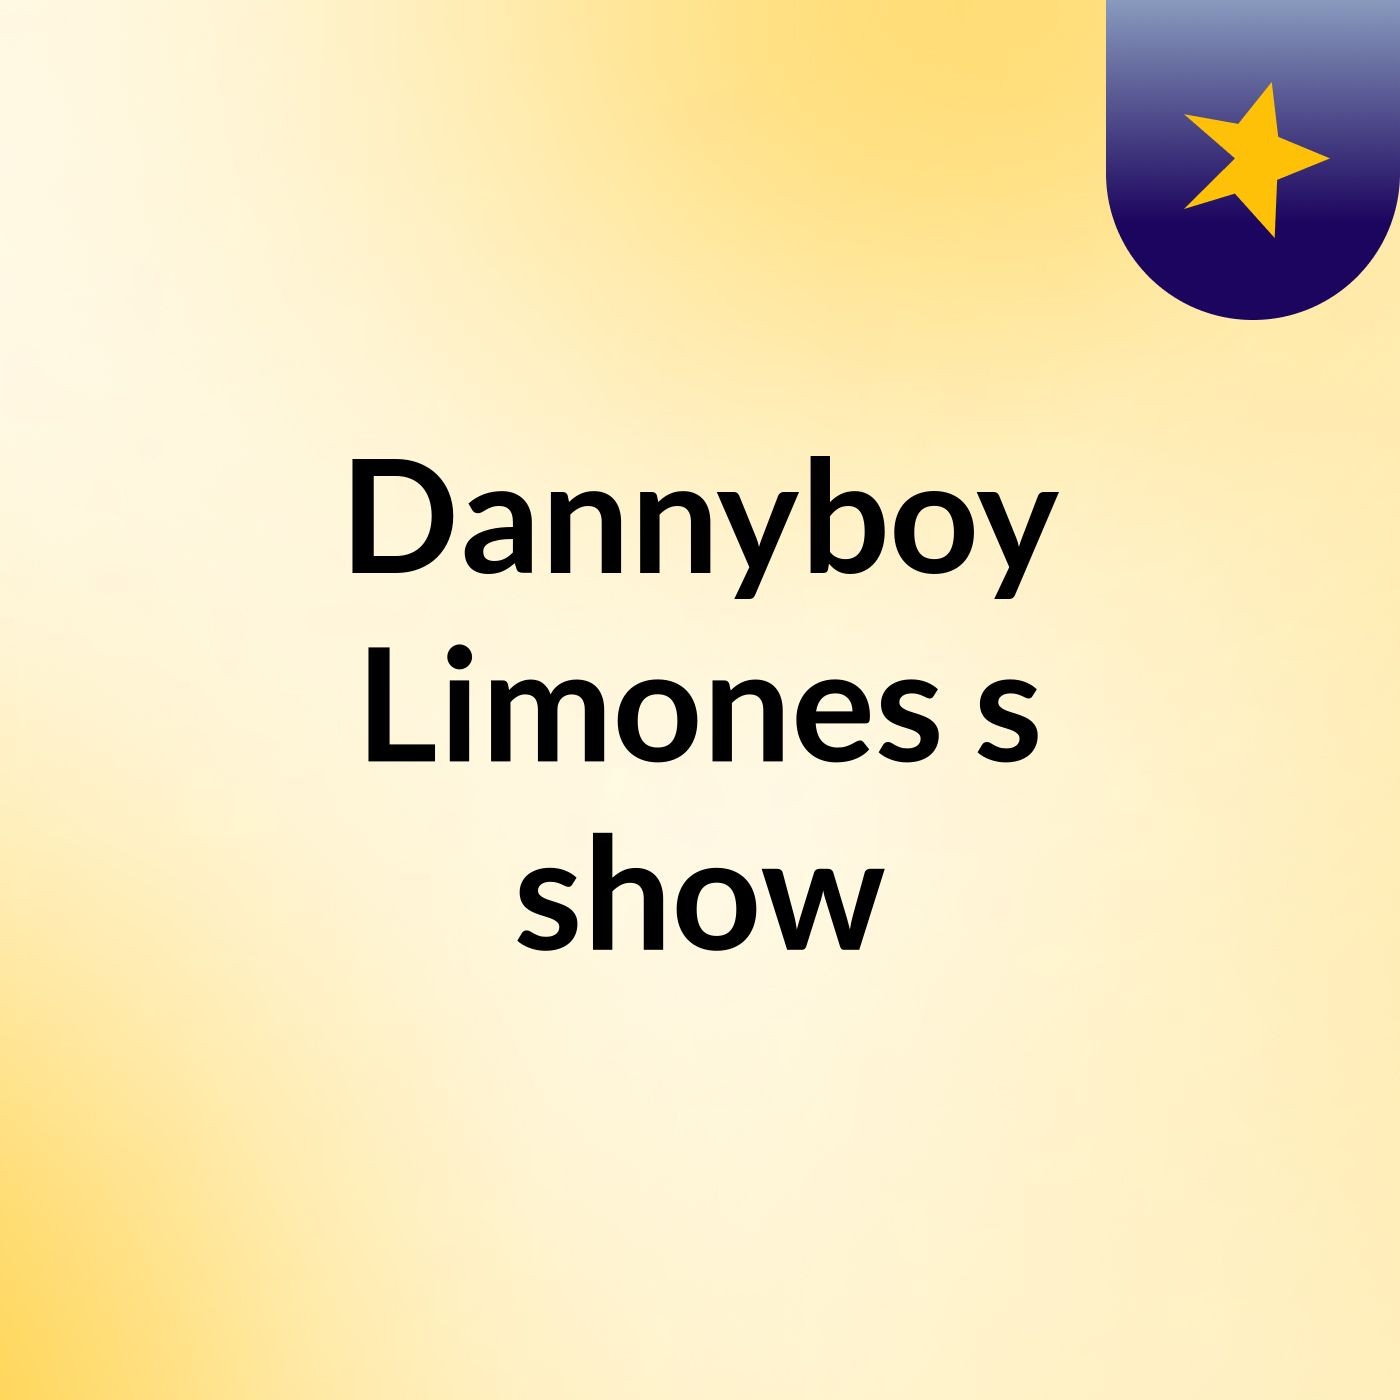 Episode 12 - Dannyboy Limones's show